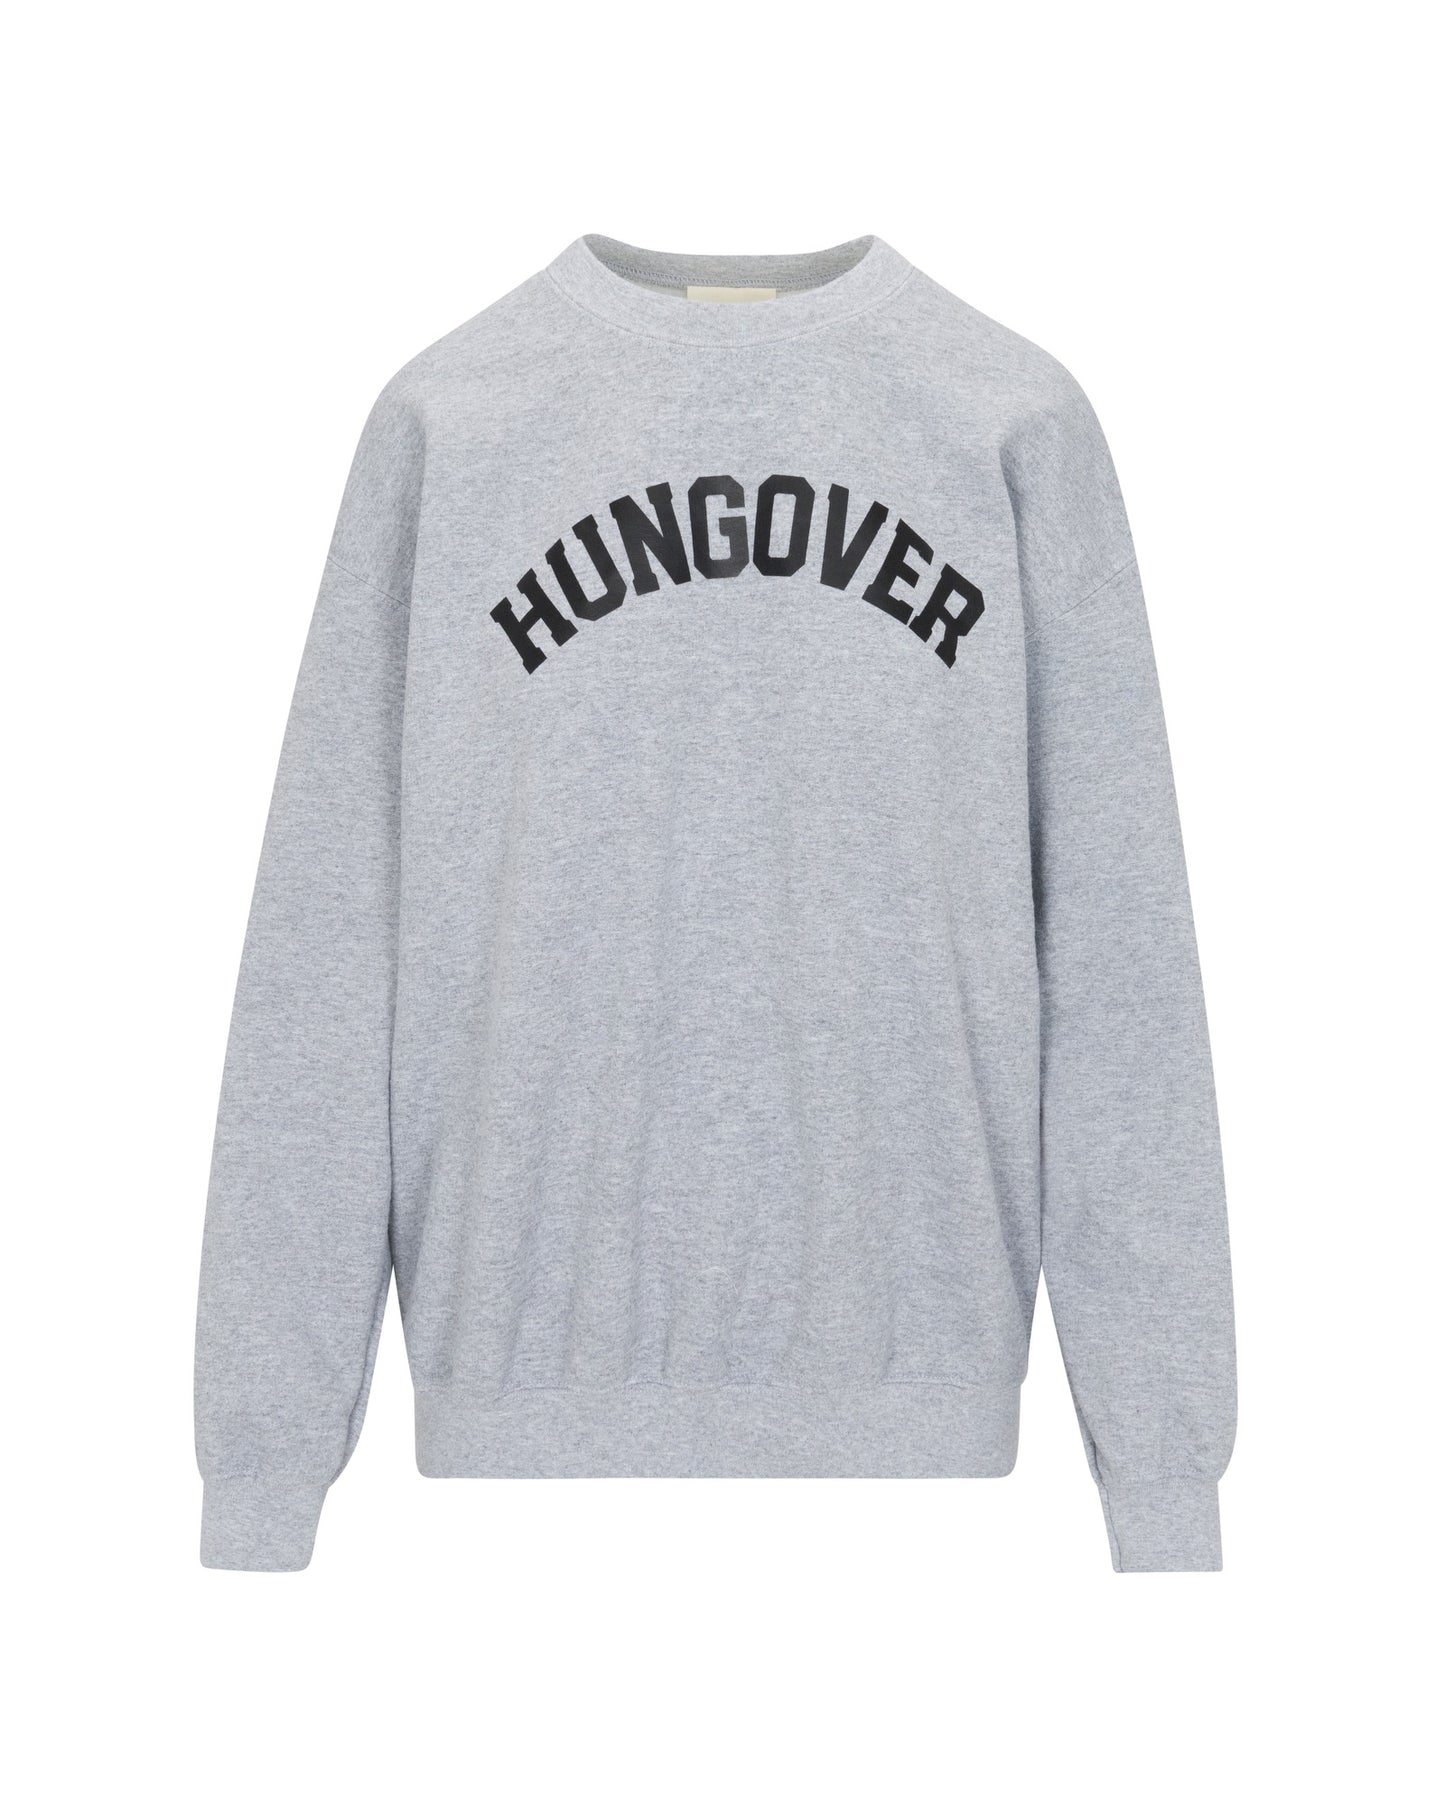 Hungover Vintage Sweatshirt